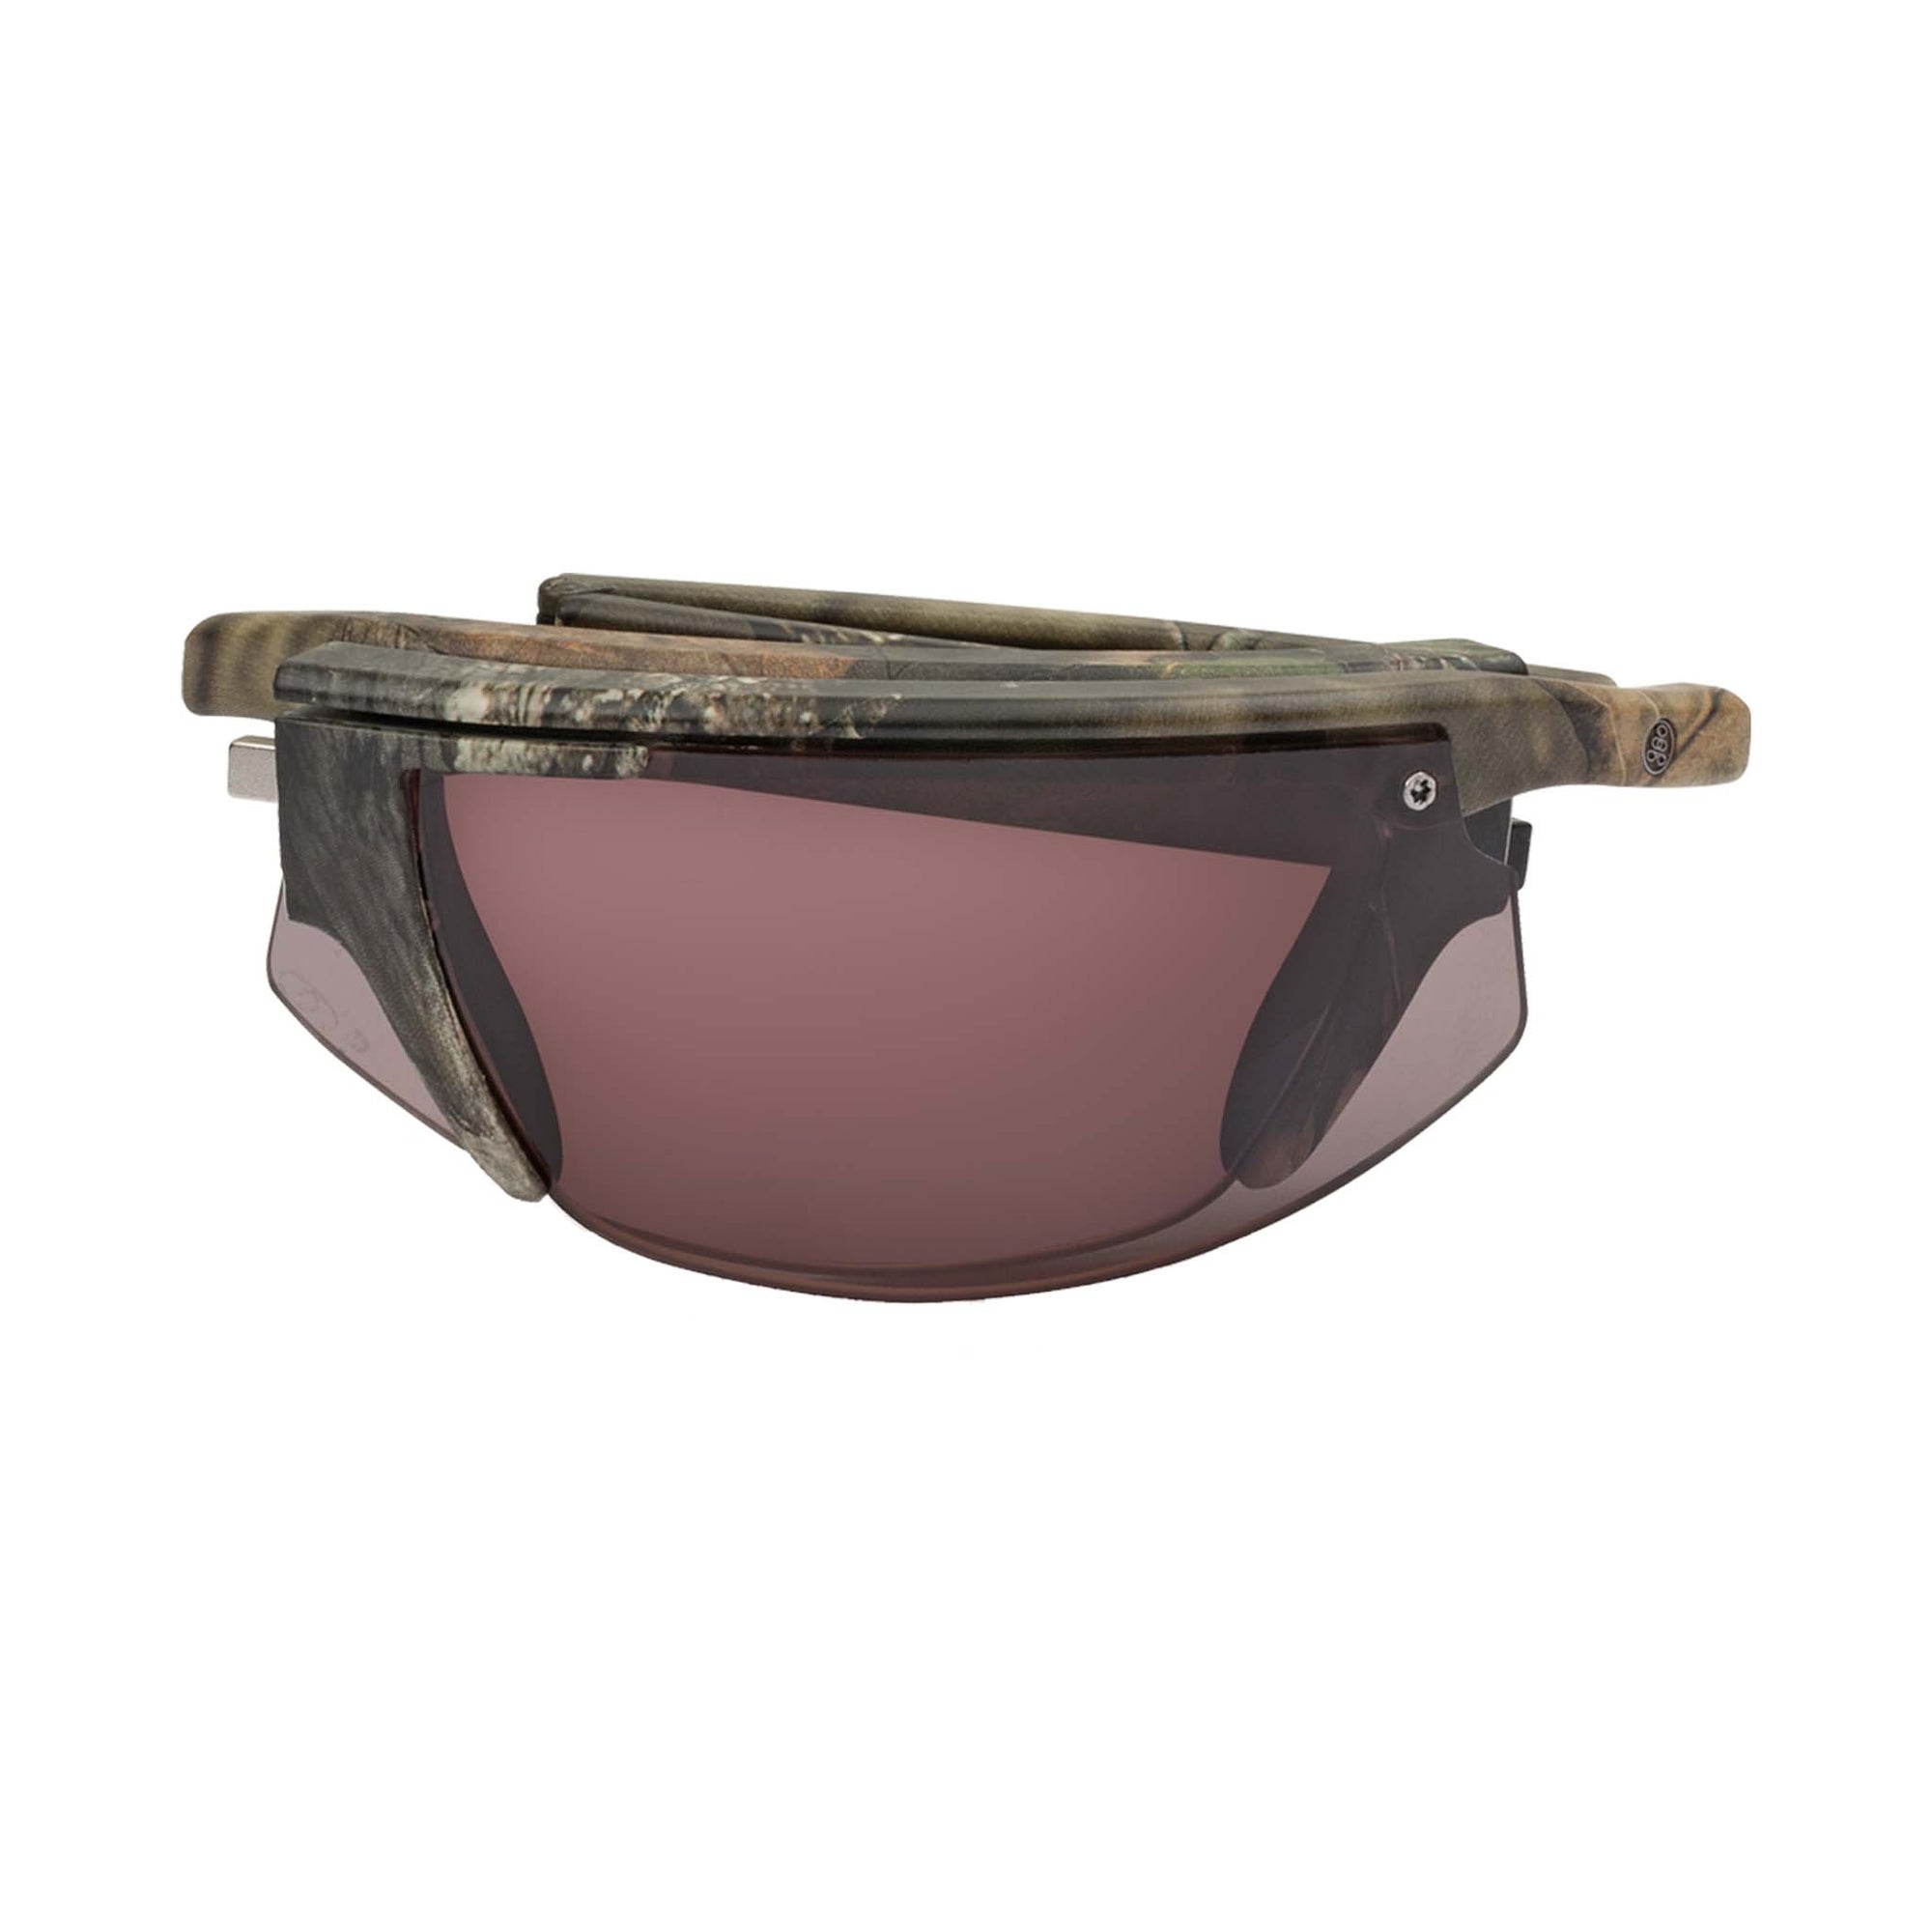 Popticals, Premium Compact Sunglasses, PopStar, 010040-MCNP, Polarized Sunglasses, Matte Mossy Oak Break-Up Frame, Brown Lenses, Compact View